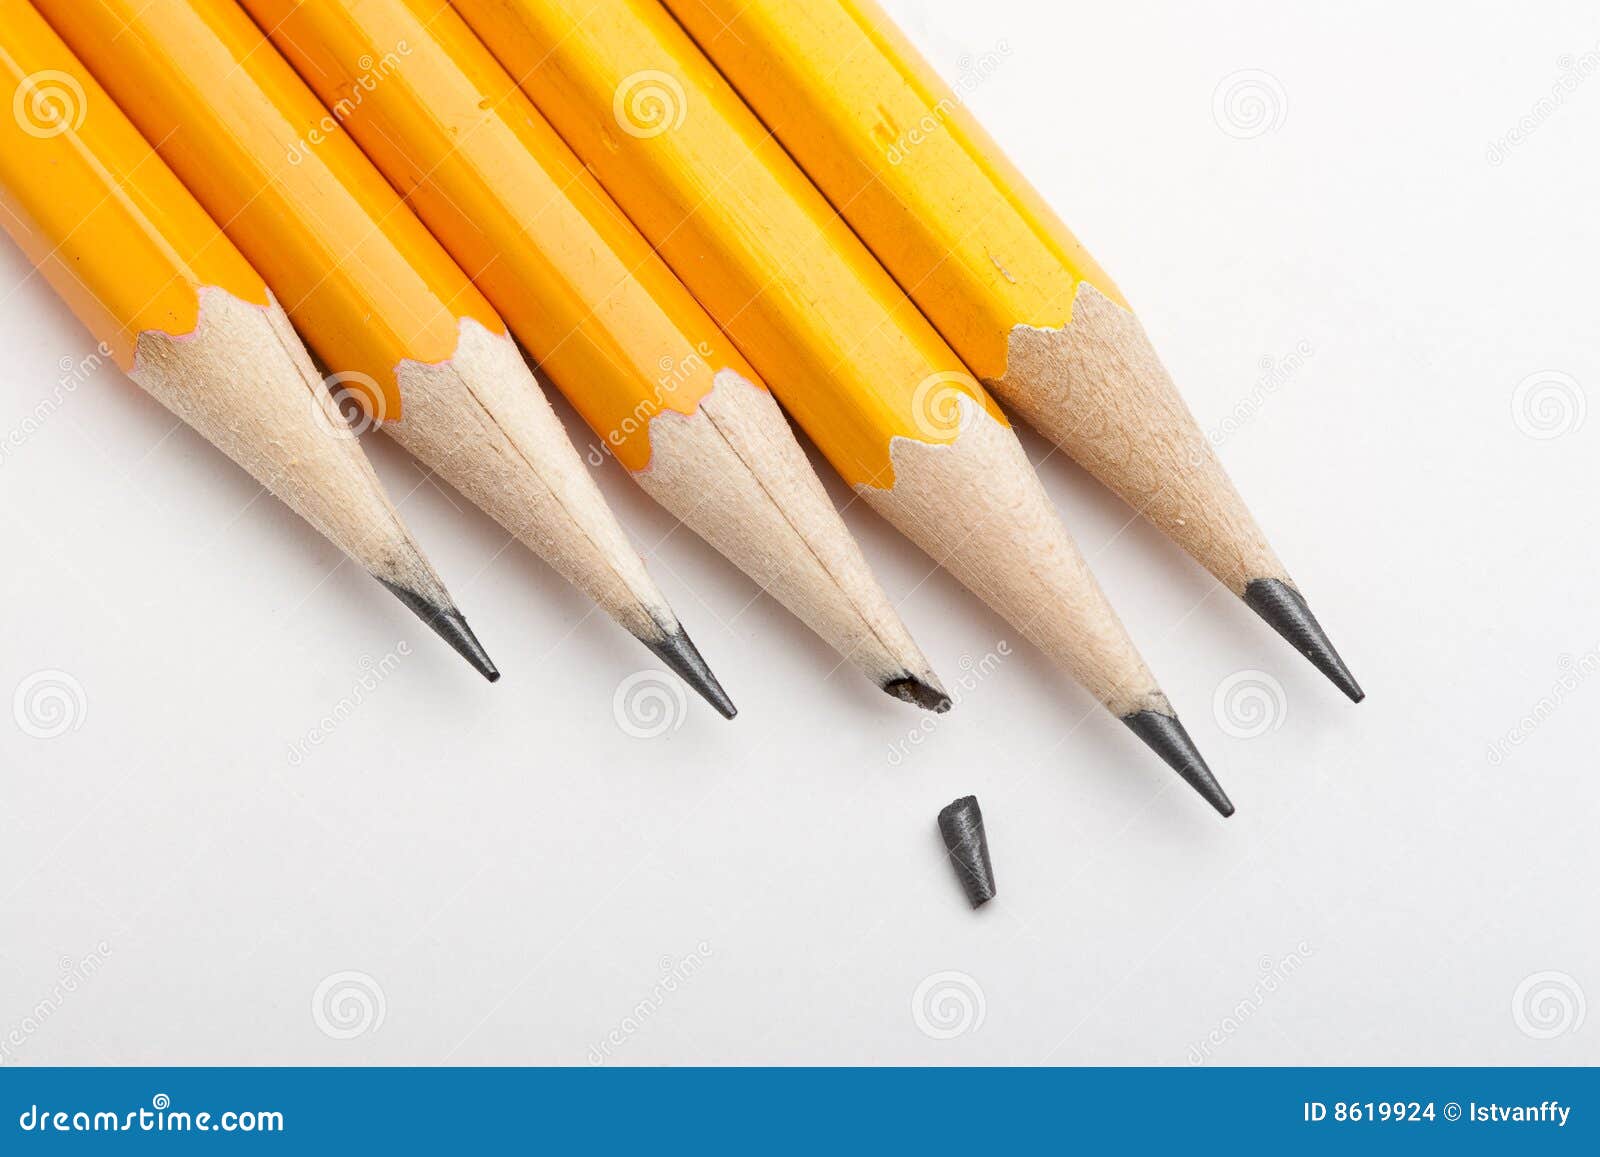 one-broken-point-sharp-pencils-8619924.jpg